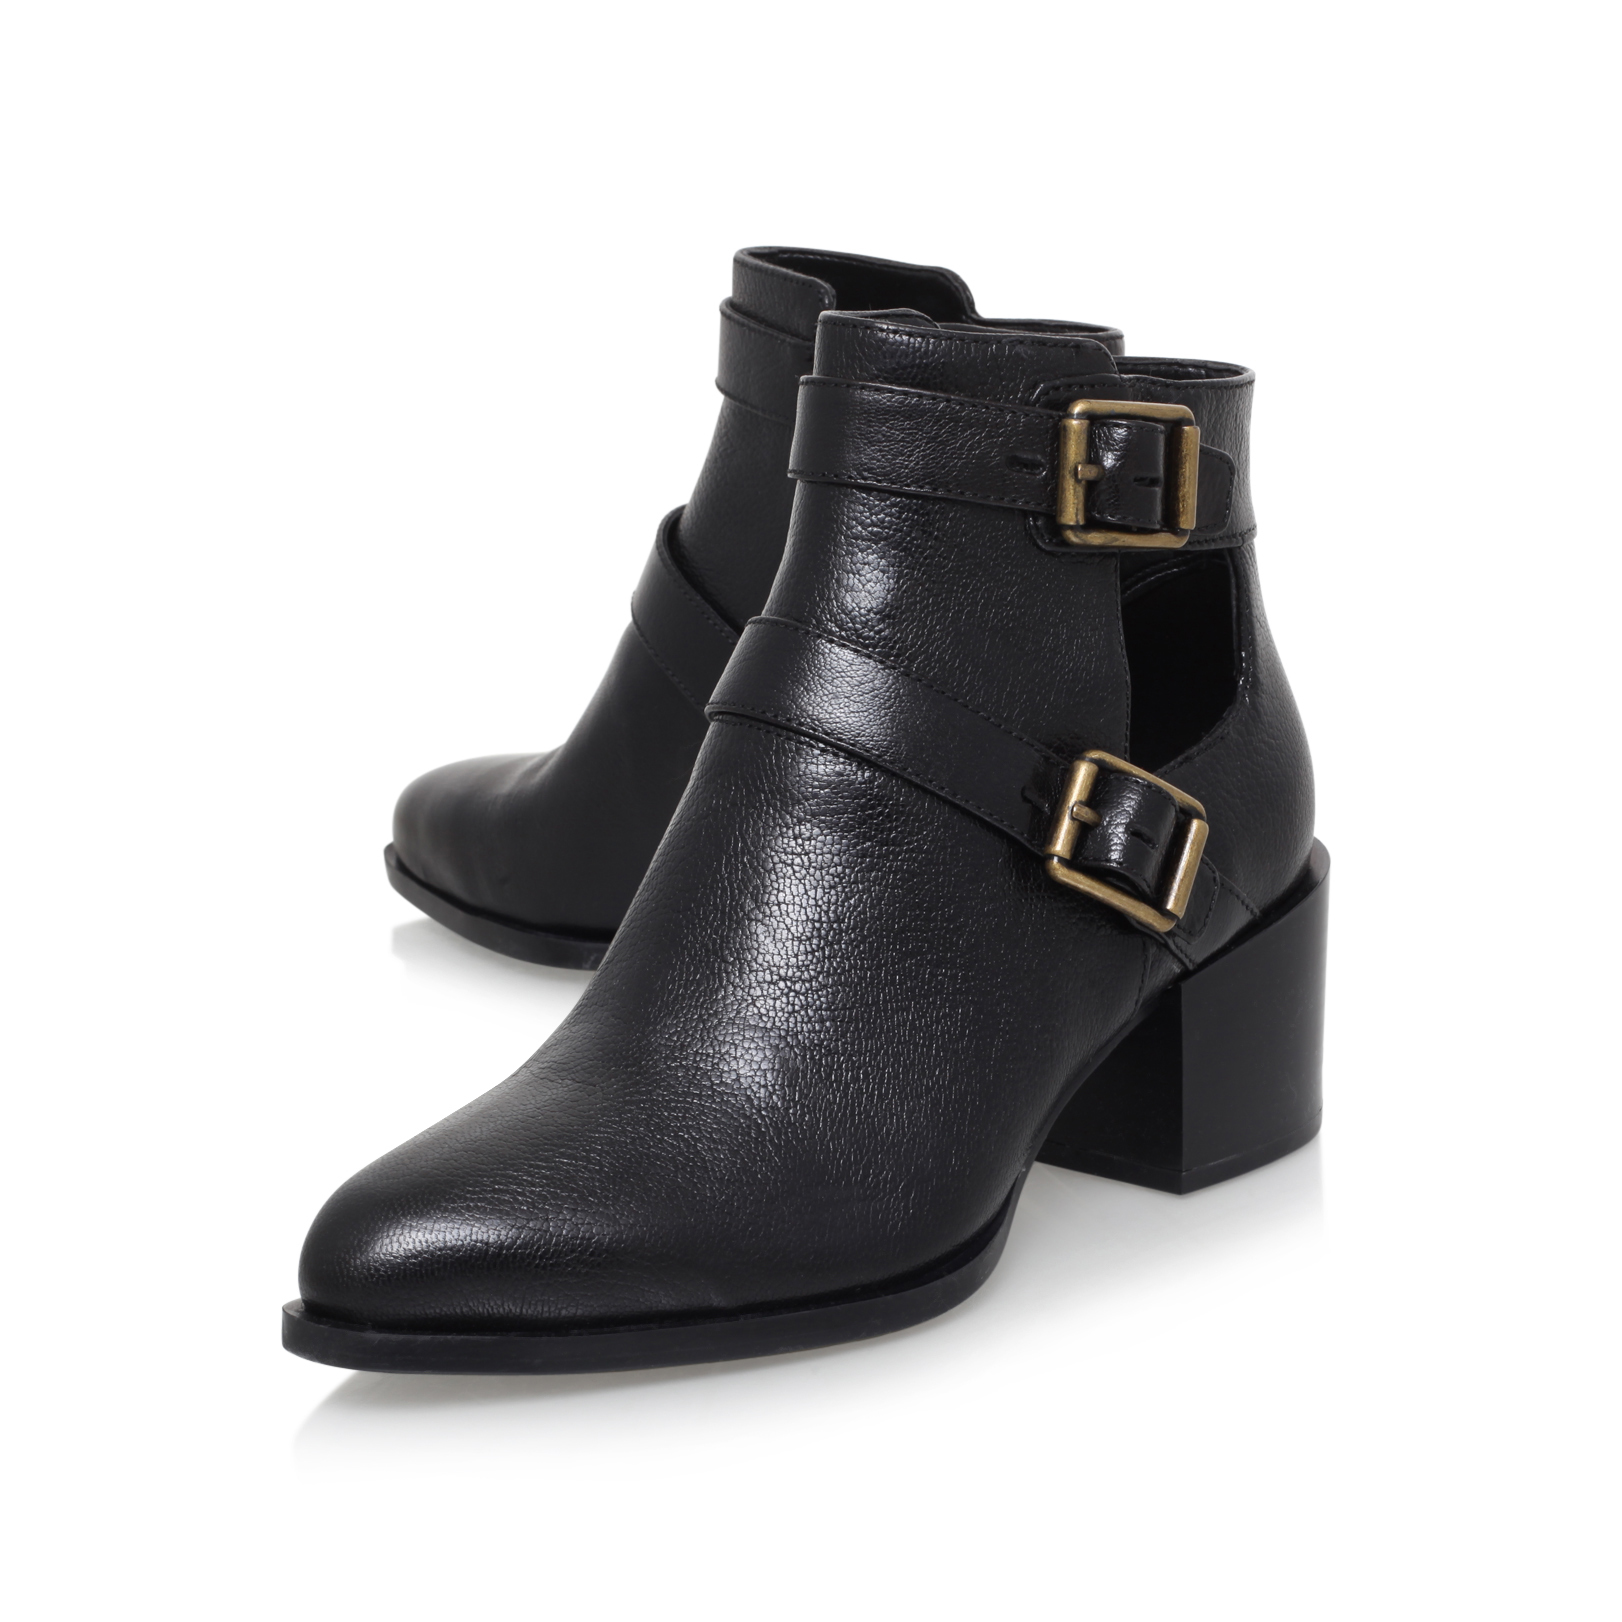 EVALEE Nine West Evalee Black Leather Mid Heel Ankle Boots by NINE WEST